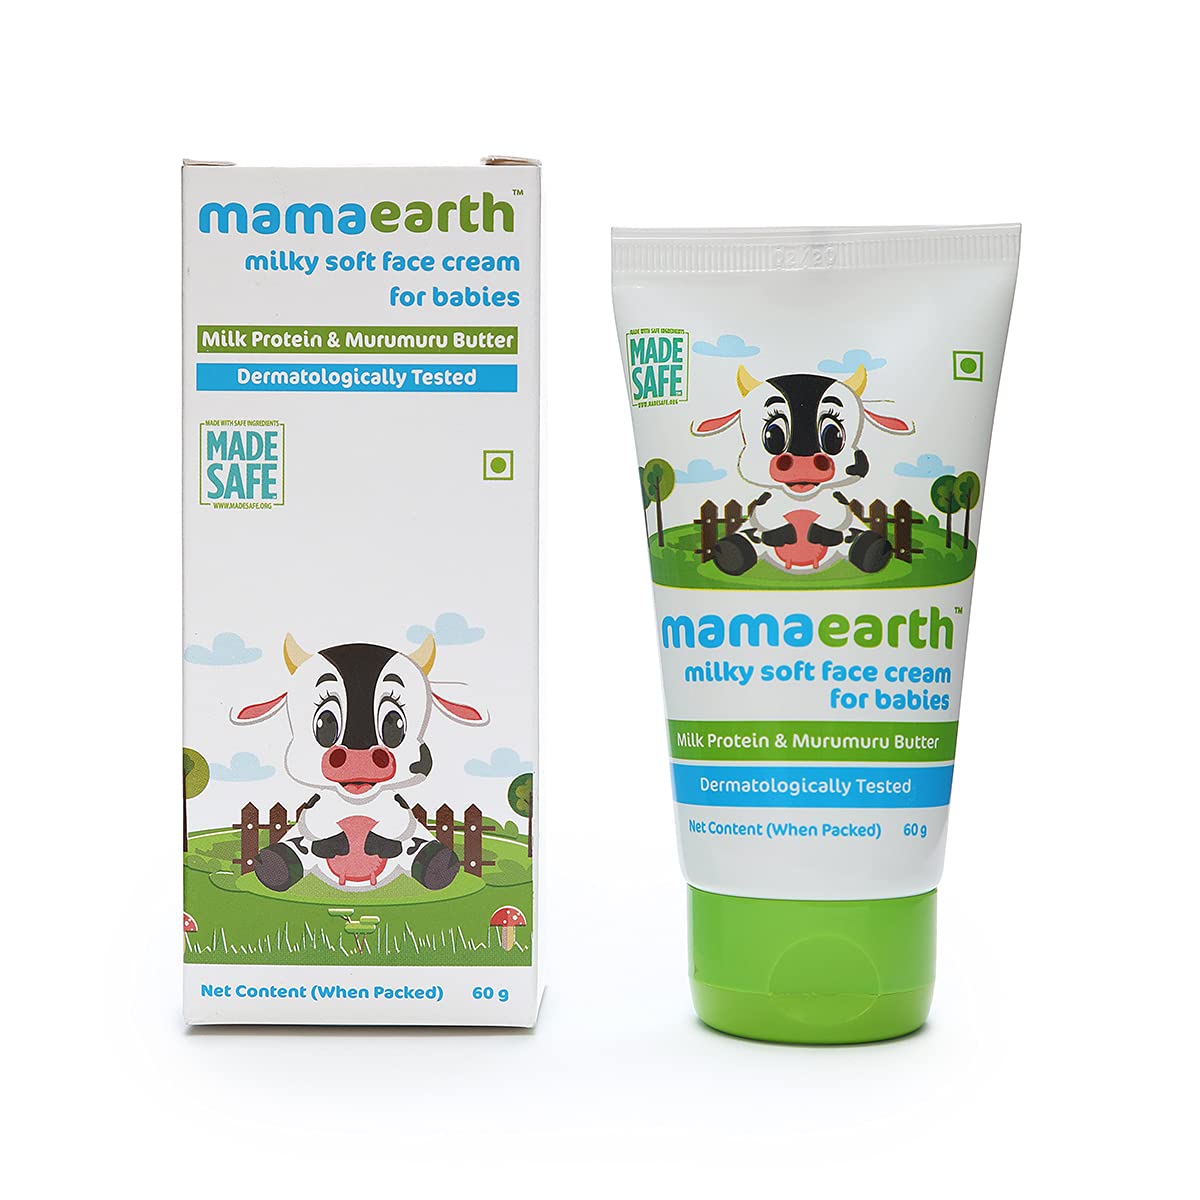 Mama earth milk soft face cream for babies 60g MRP 199/-